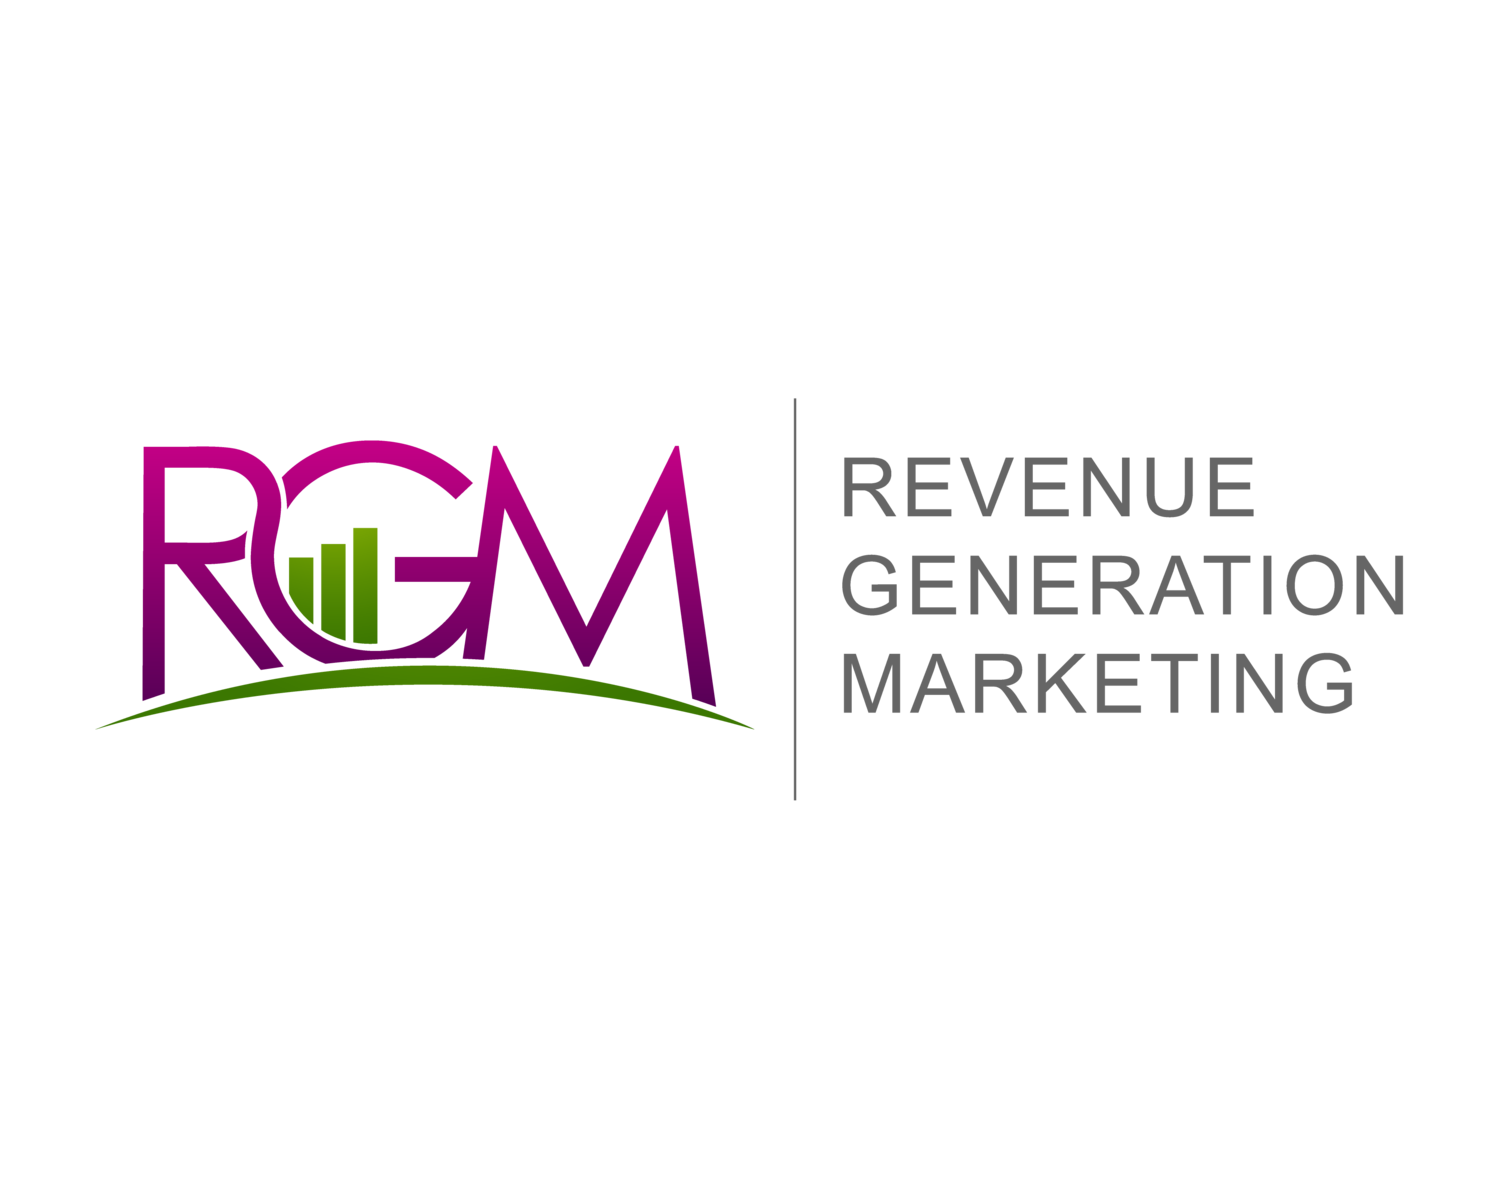 Revenue Generation Marketing